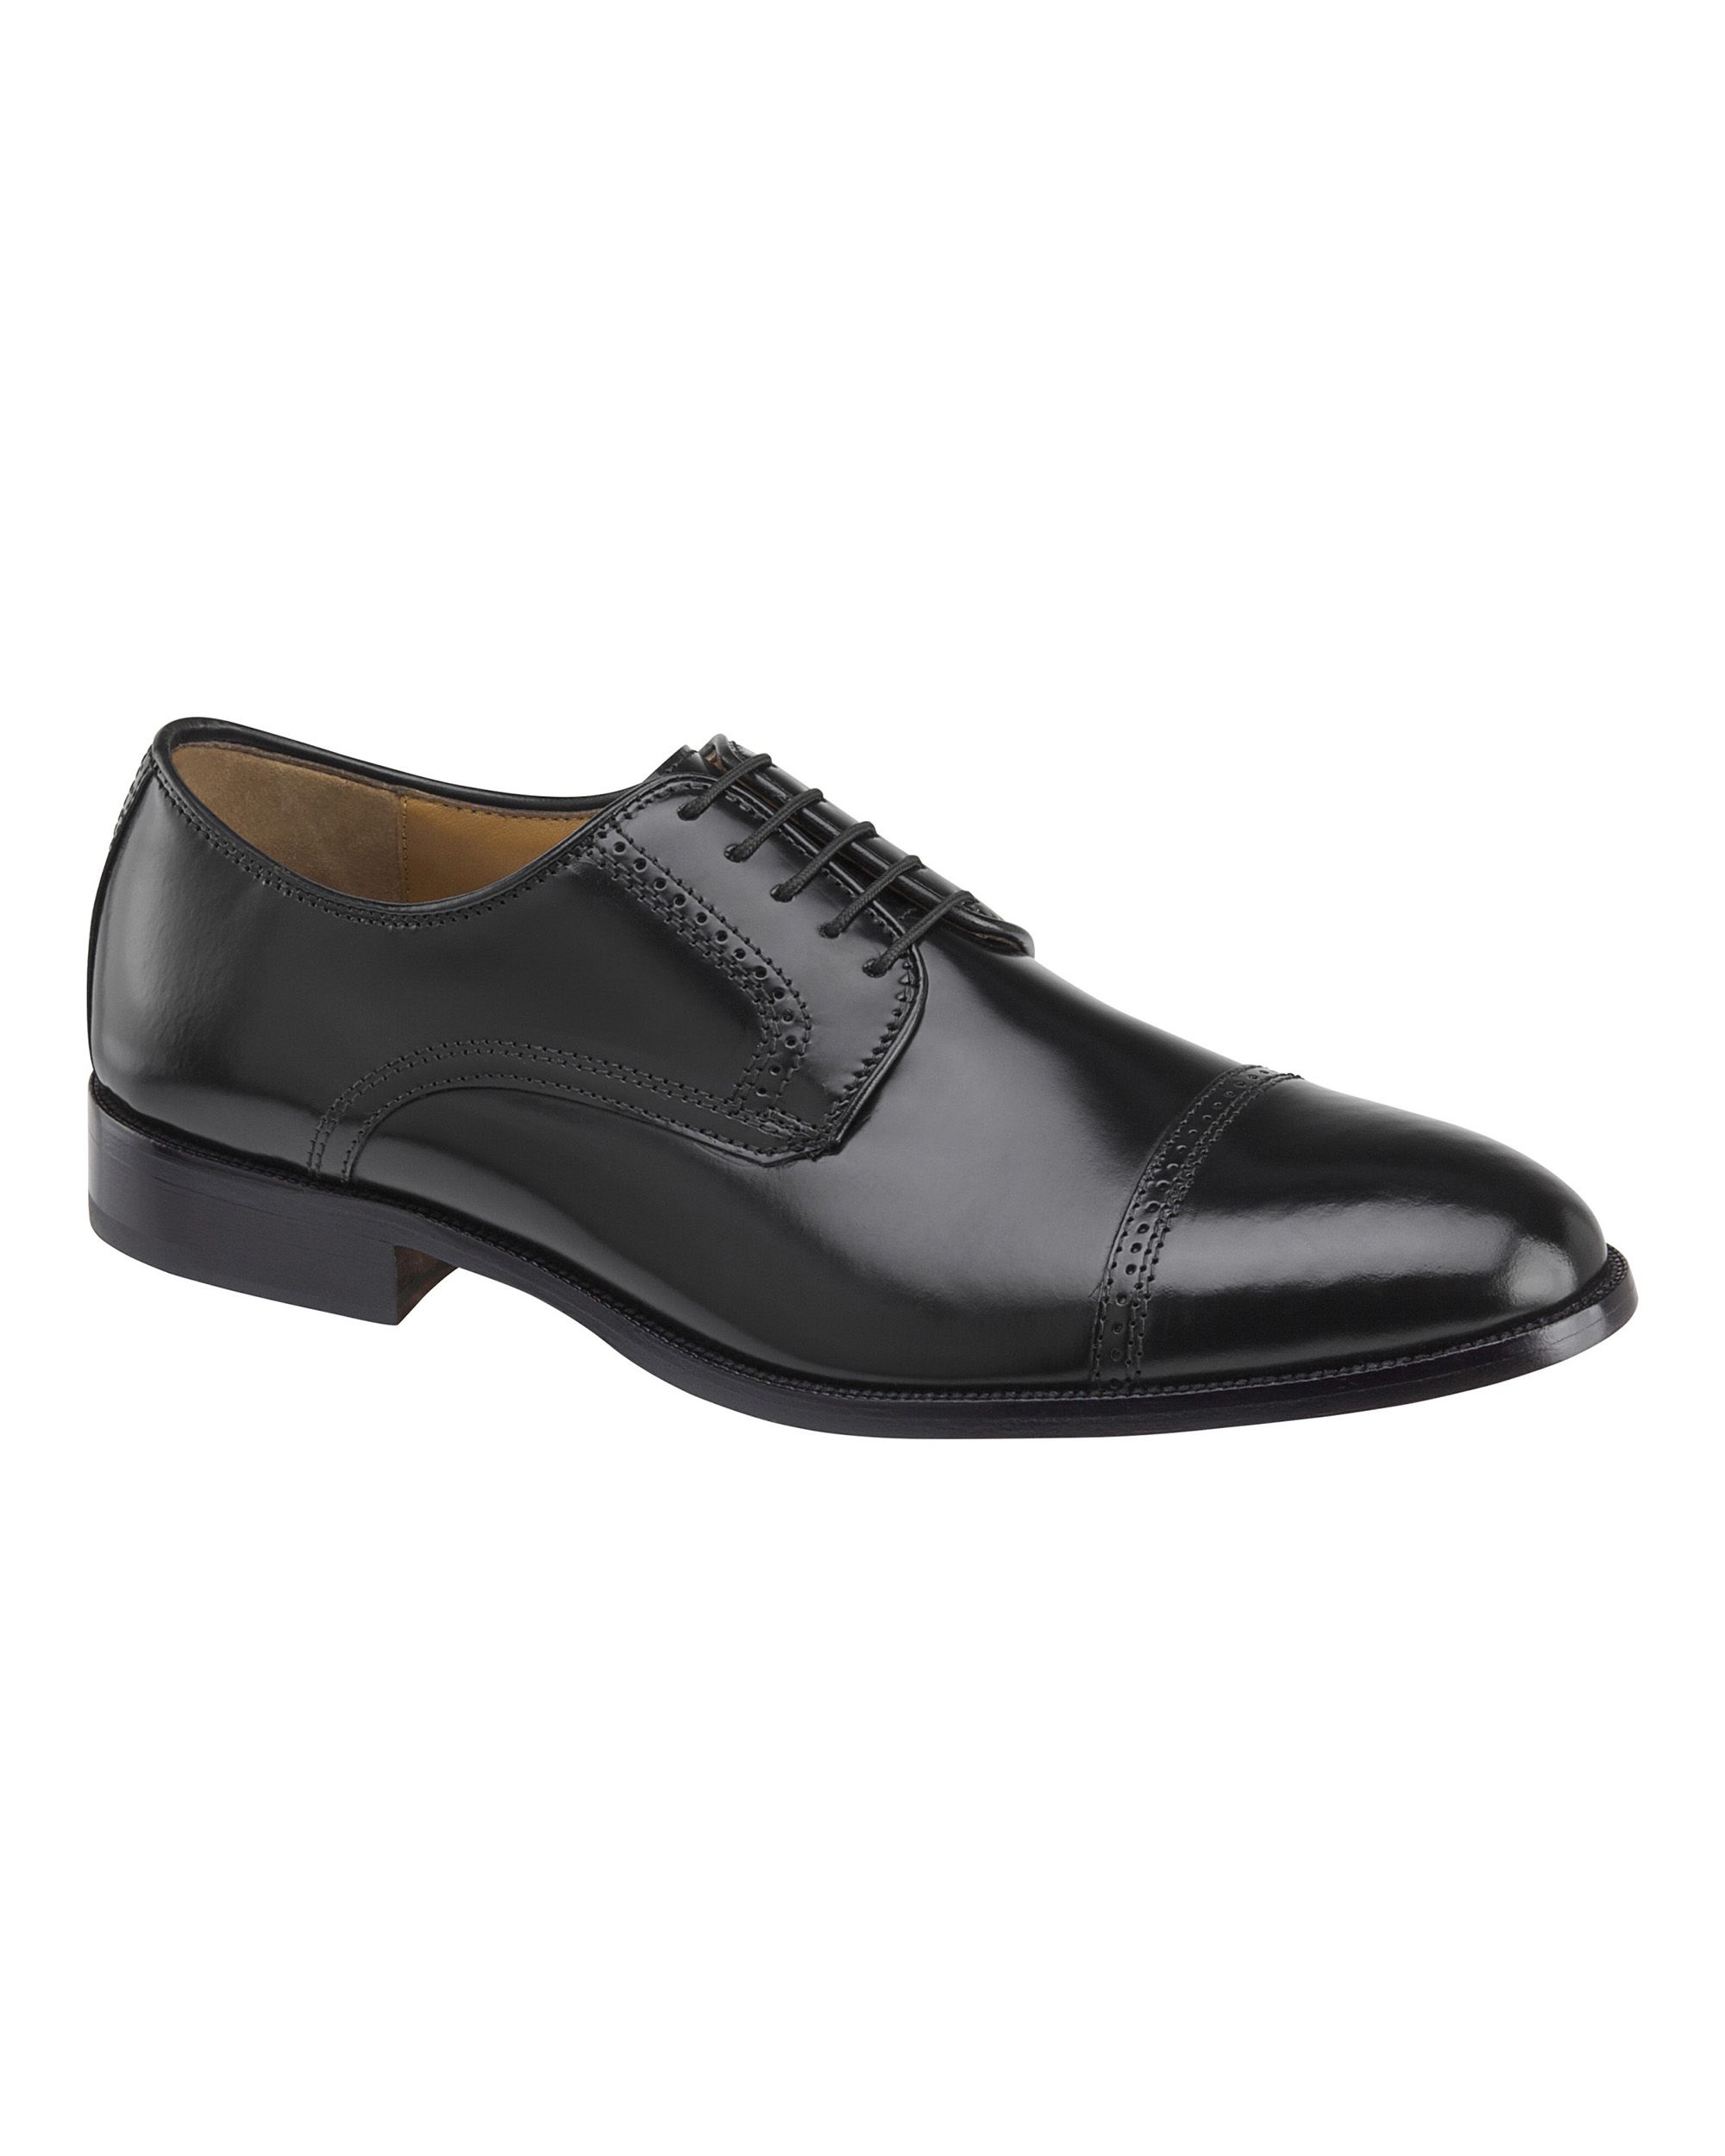 Johnston & Murphy Bradford Black Leather Cap Toe Oxford Dress Shoe 15-1771 